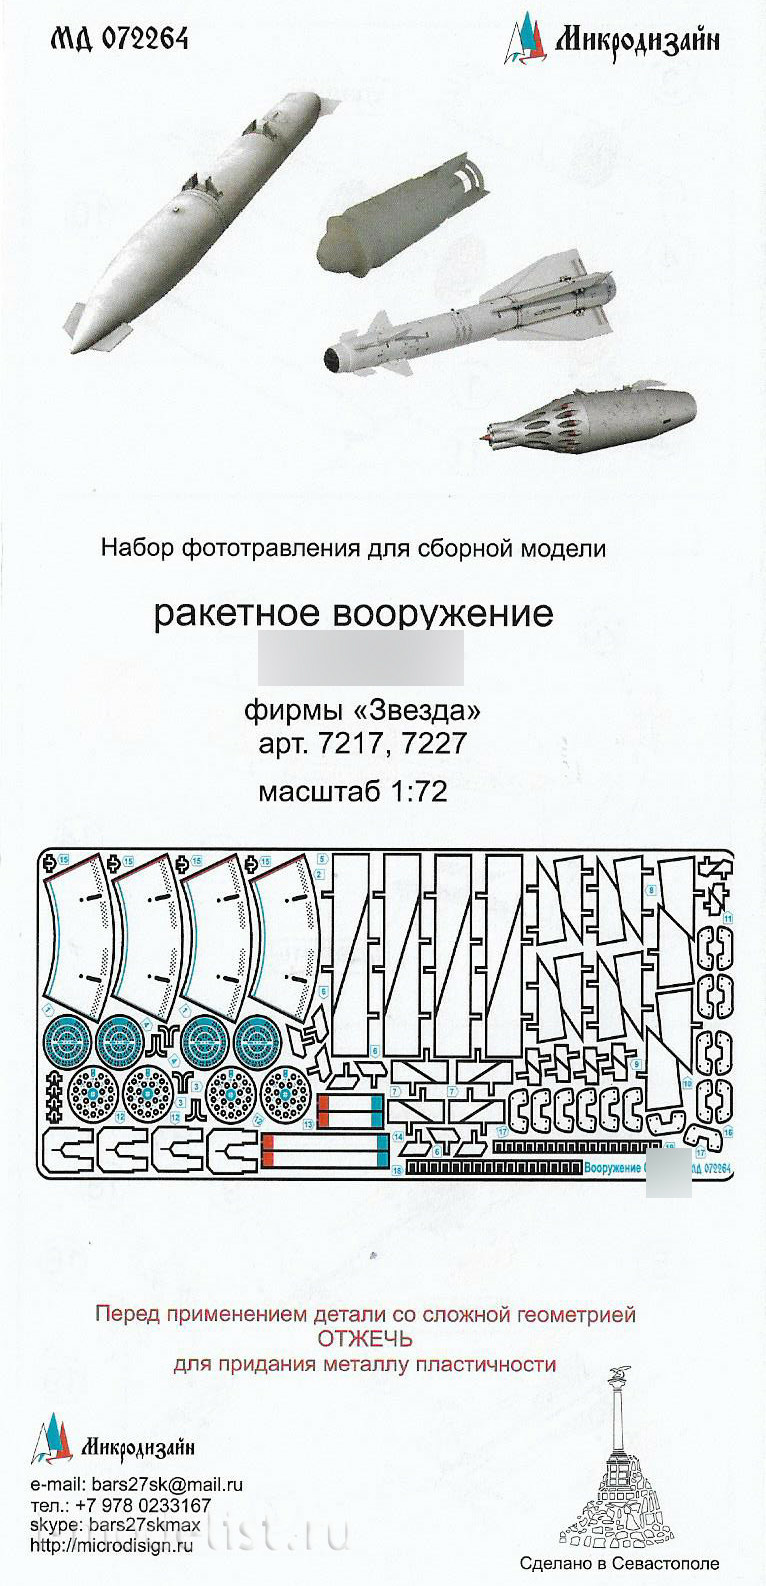 072264 Microdesign 1/72 su-25/39 tail of the bombs and bomb racks (Zvezda)